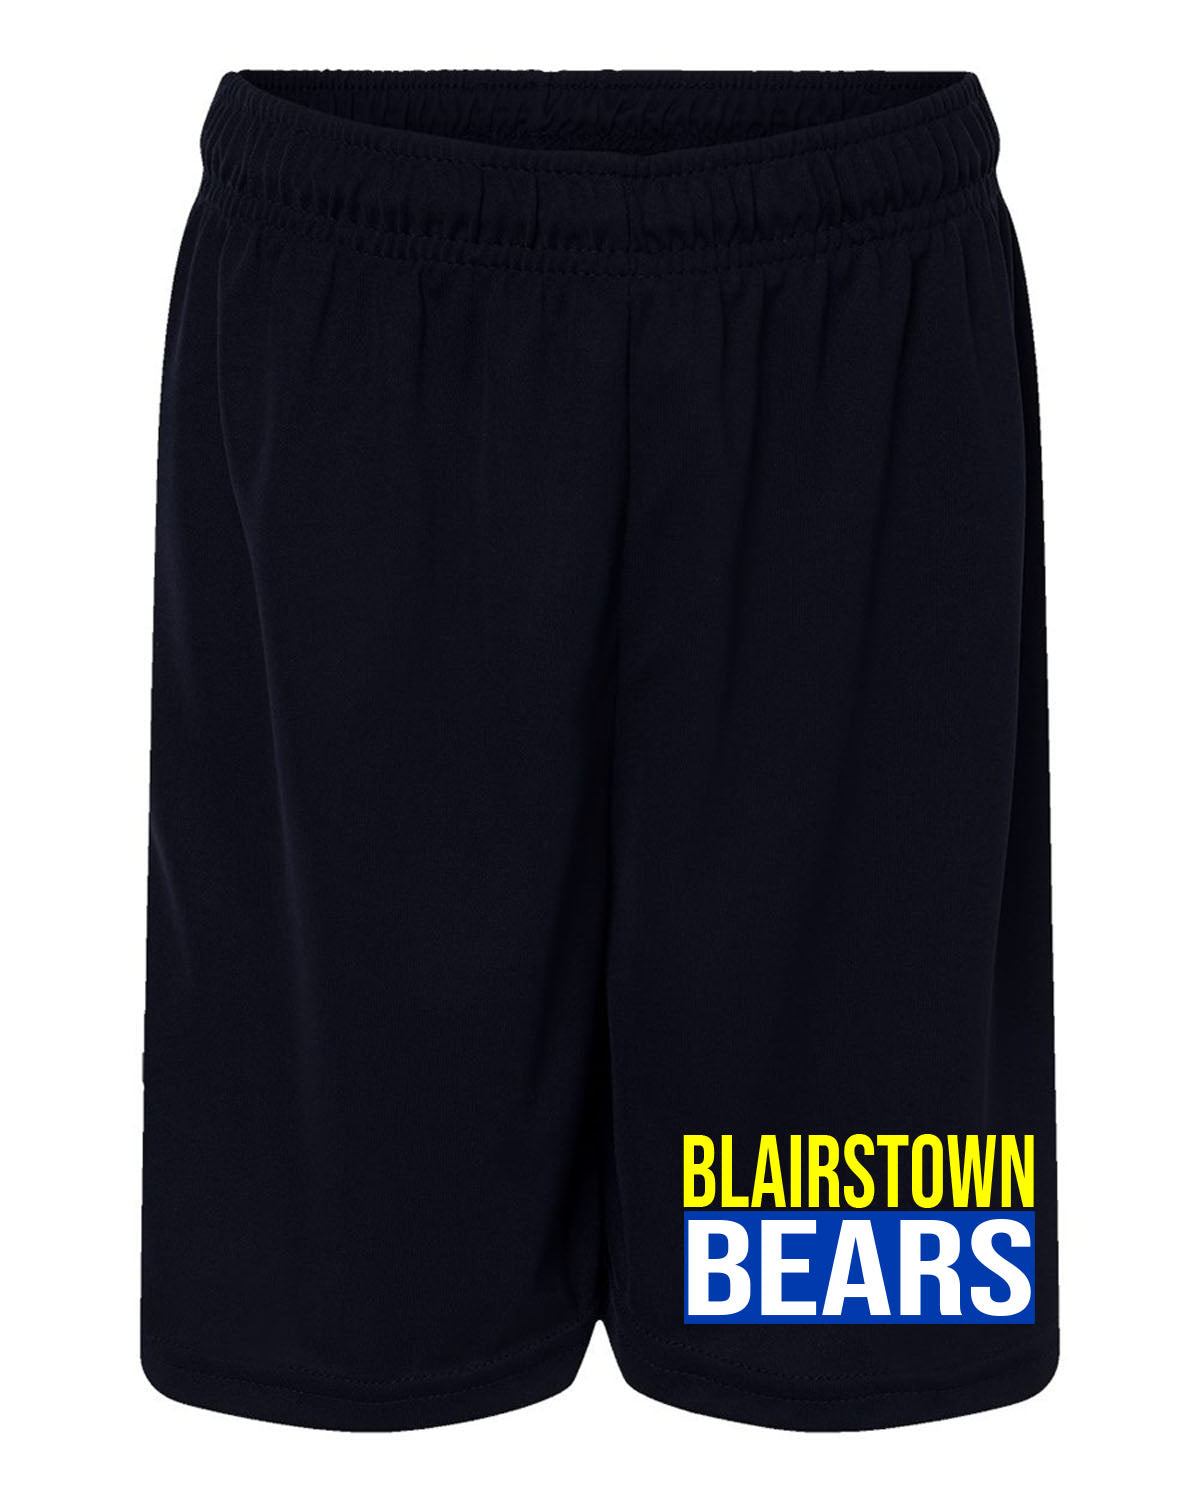 Blairstown Bears Design 12 Performance Shorts